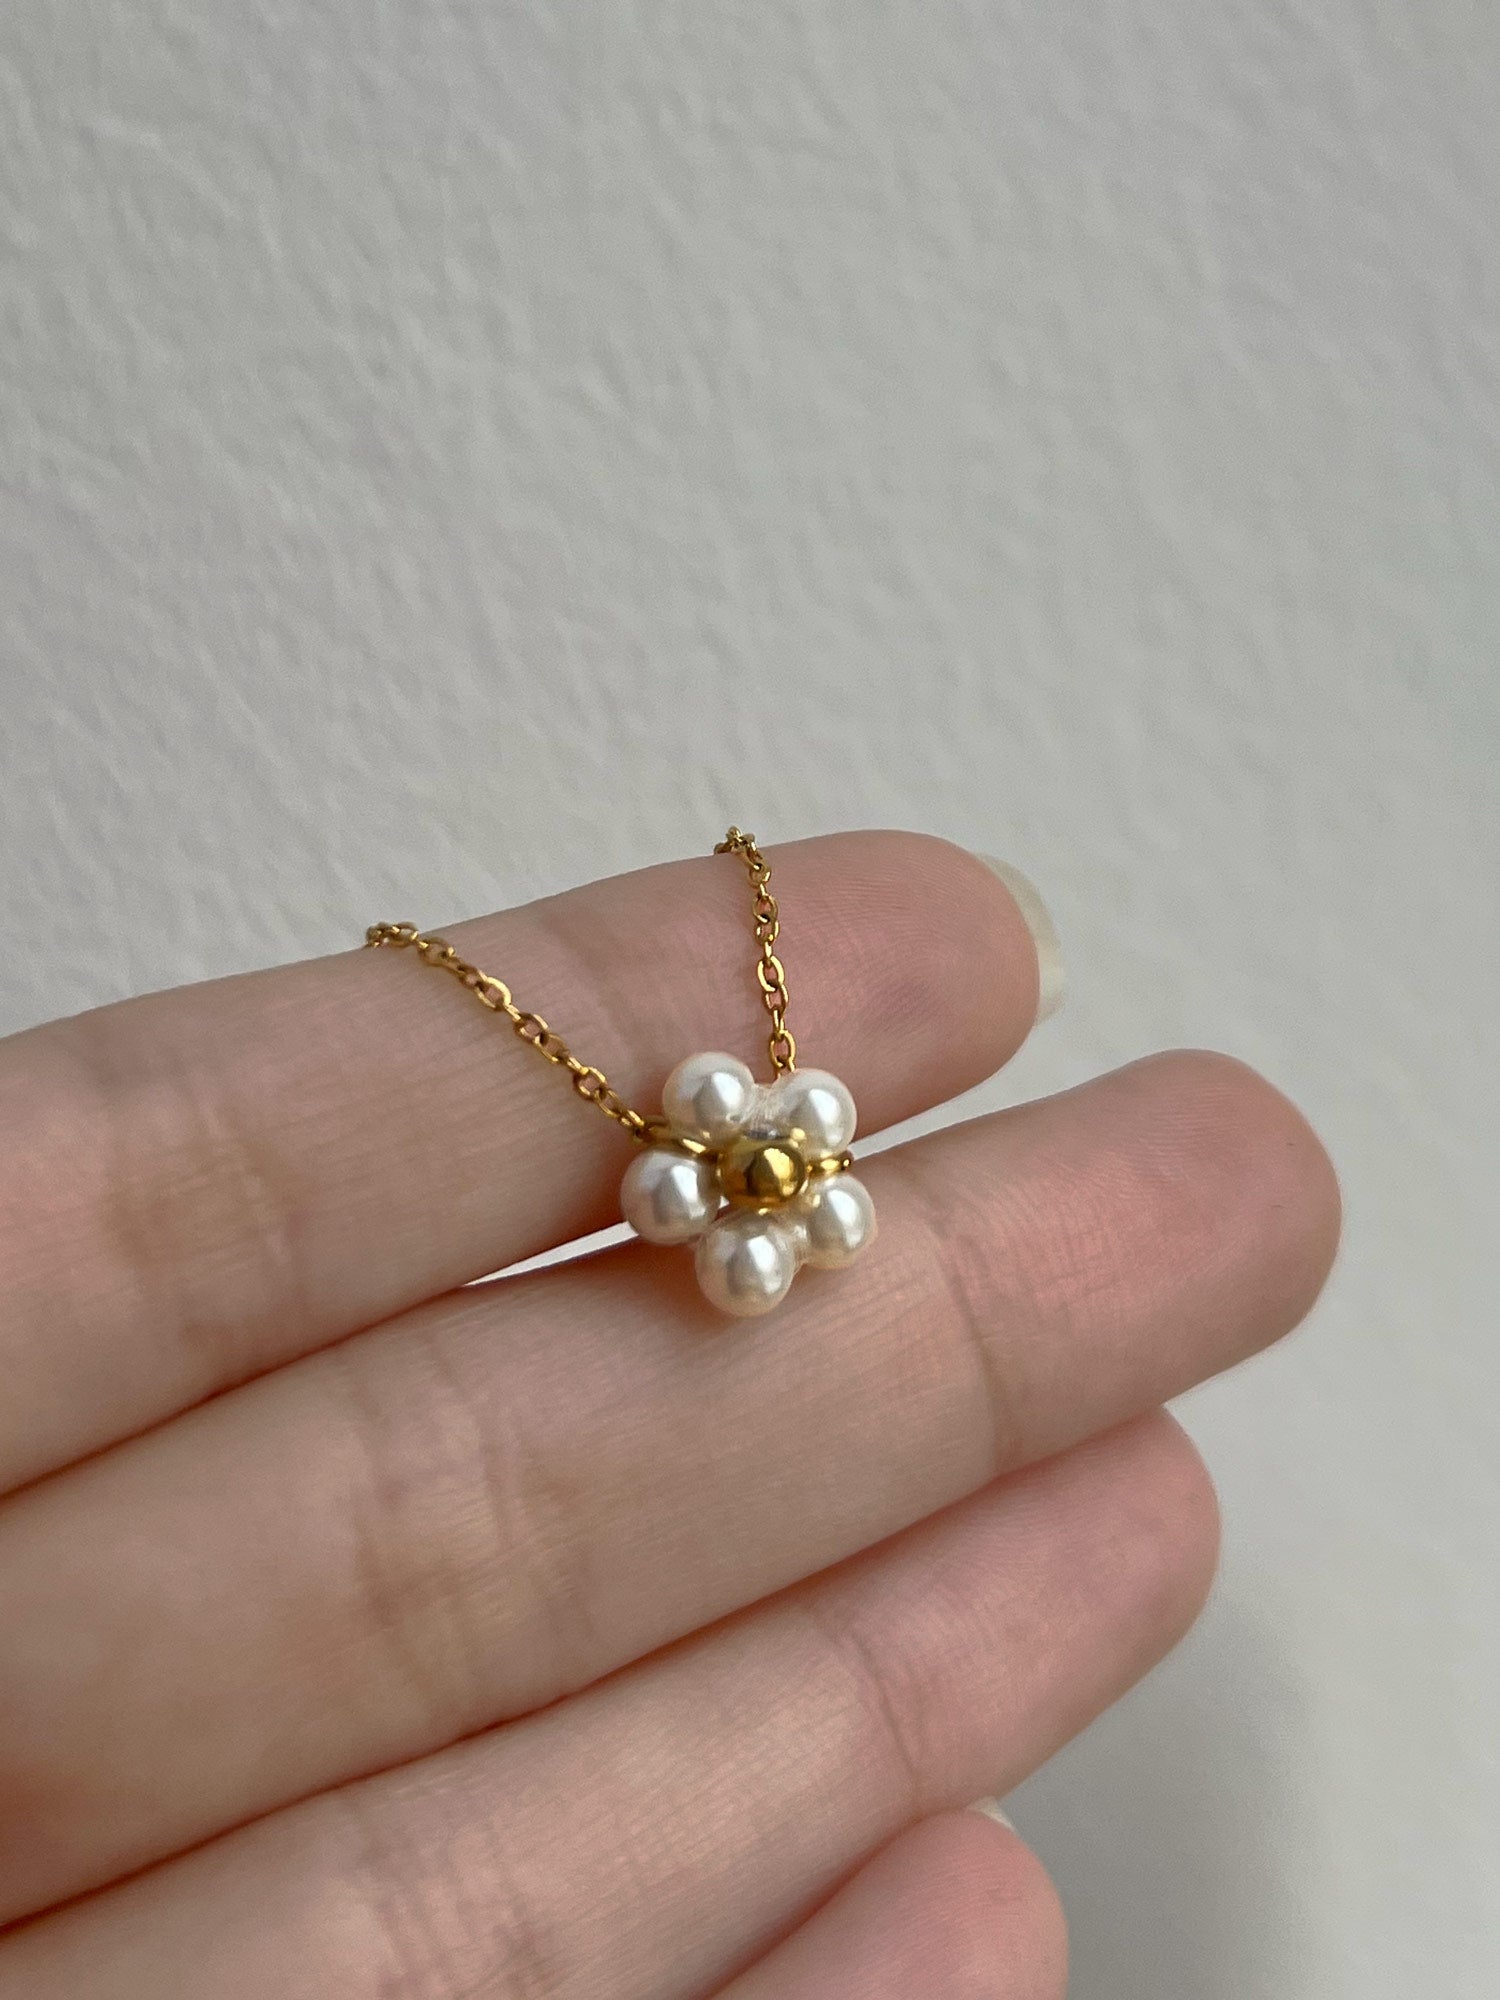 Petite Beaded Little Flower Necklace